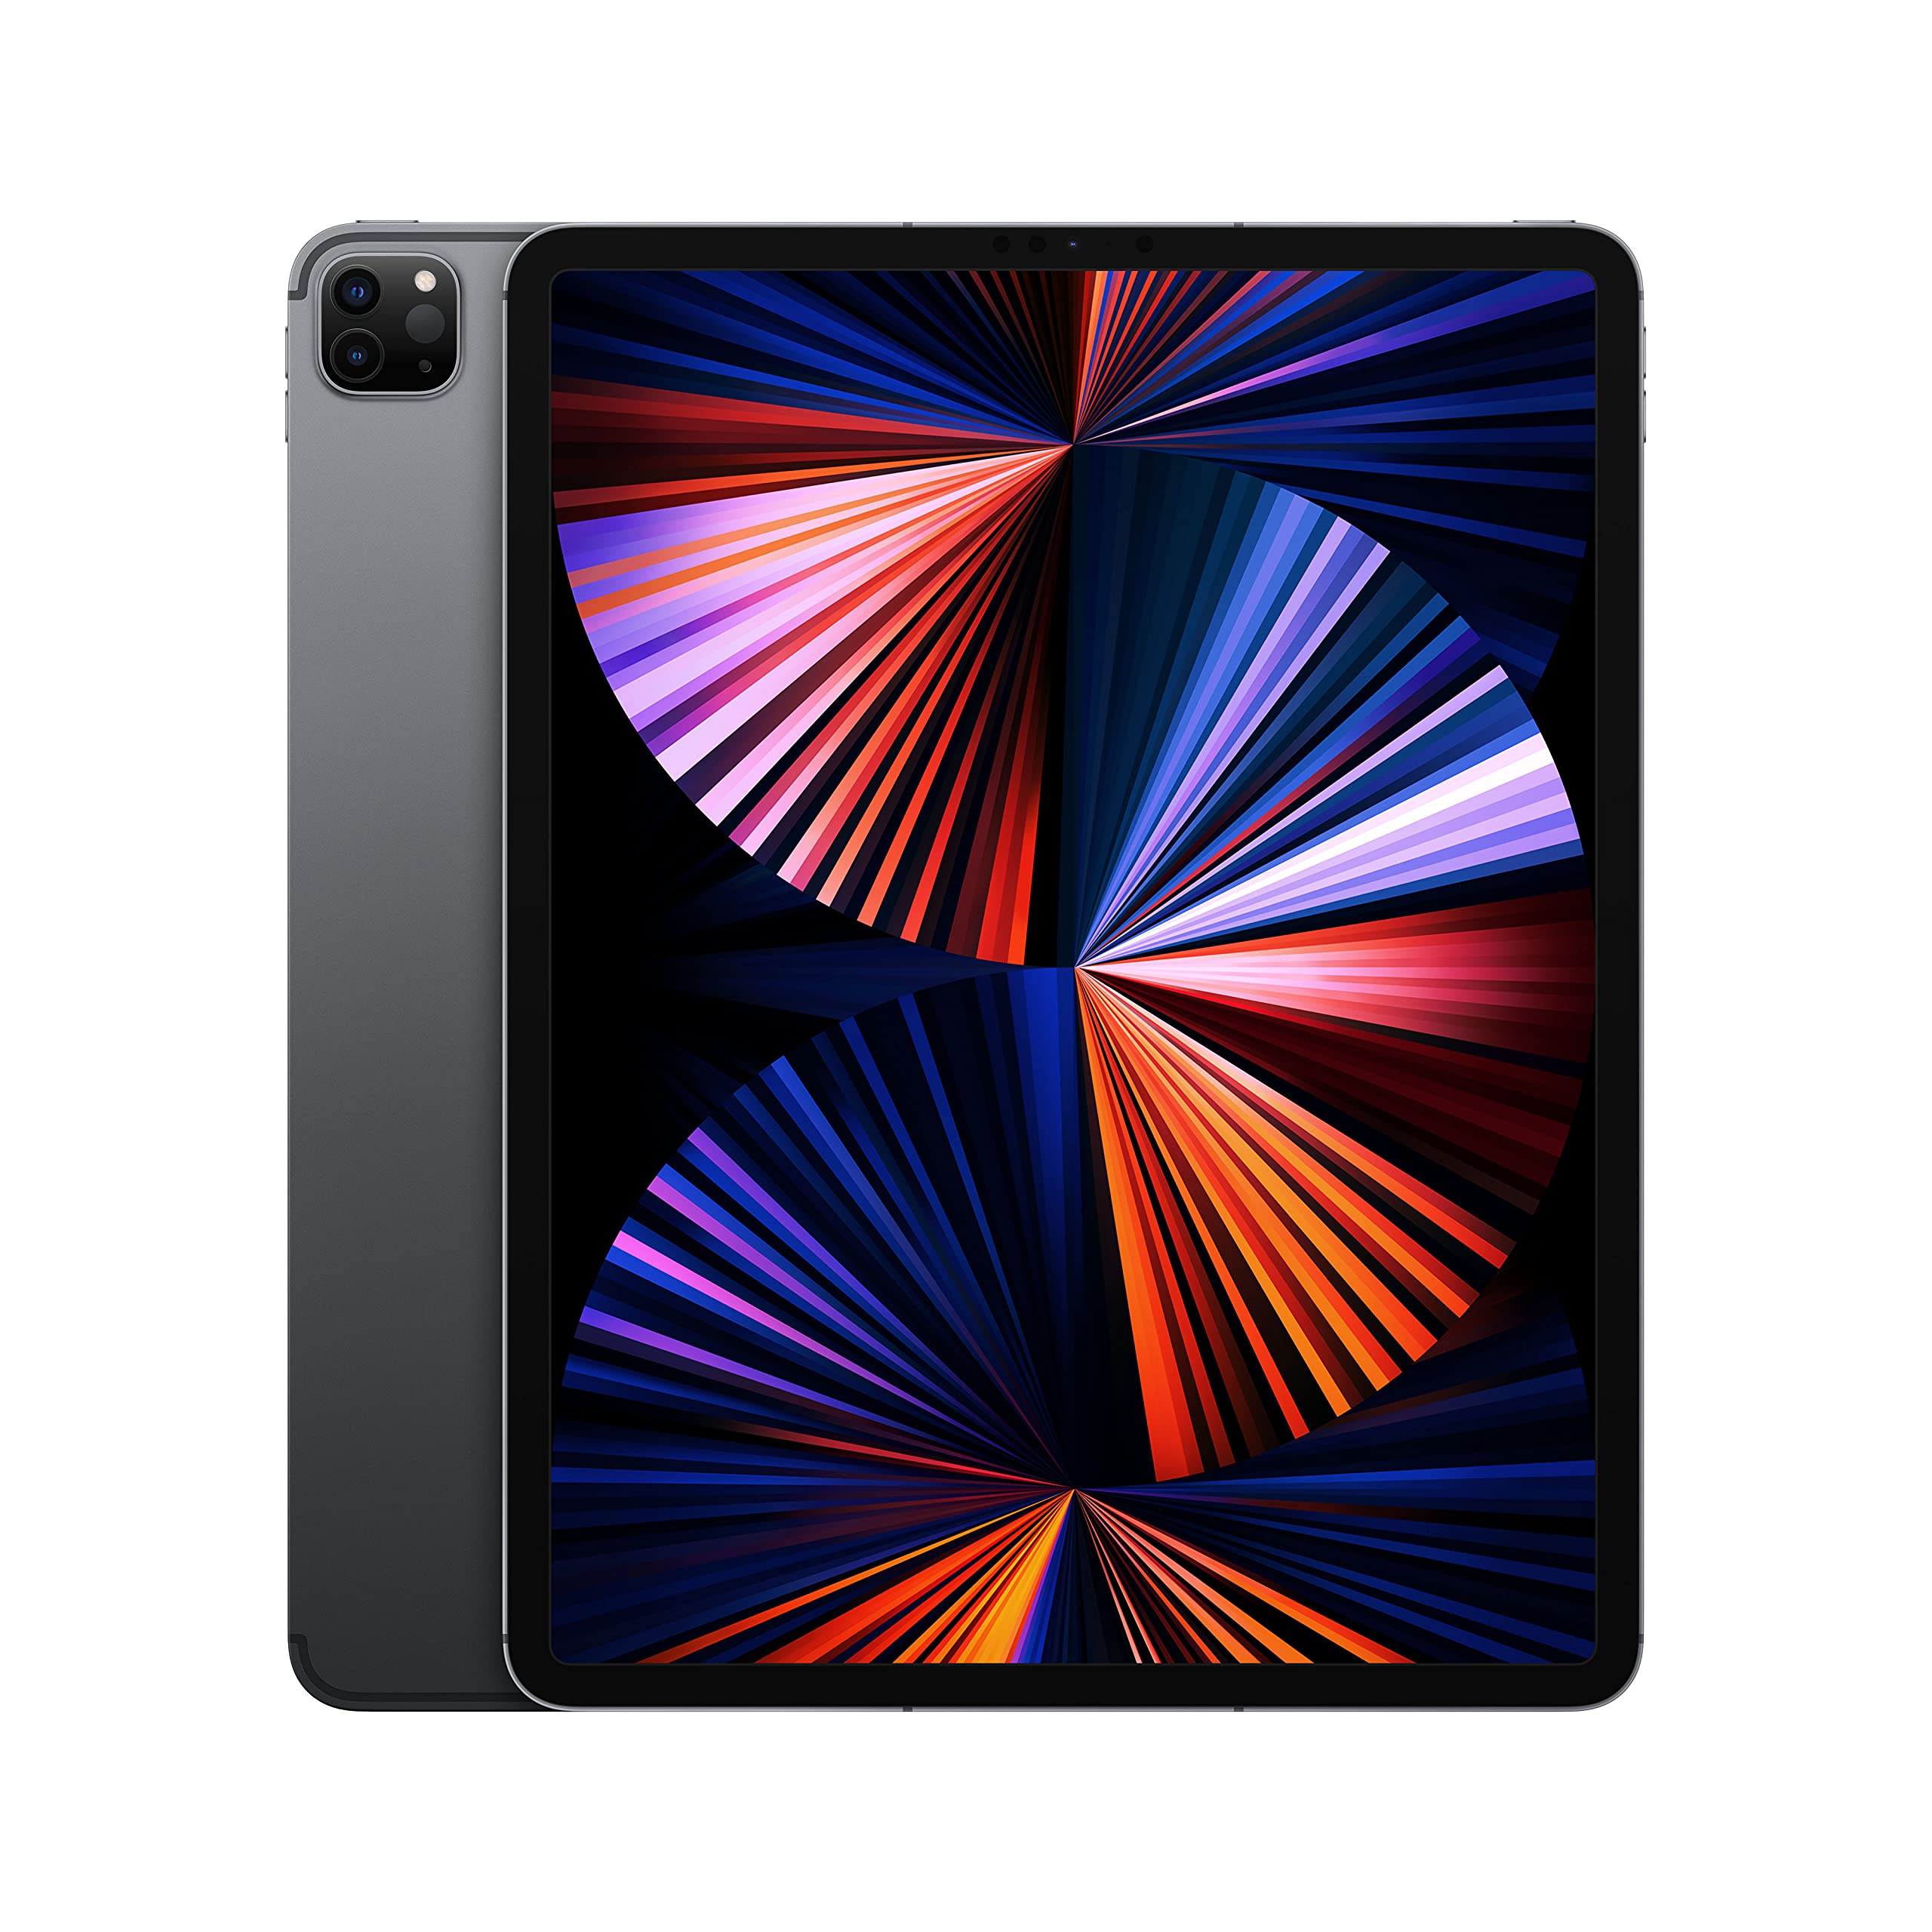 2021 Apple iPad Pro (12.9-inch, Wi-Fi + Cellular, 512GB) - Space Grey (5th Generation)